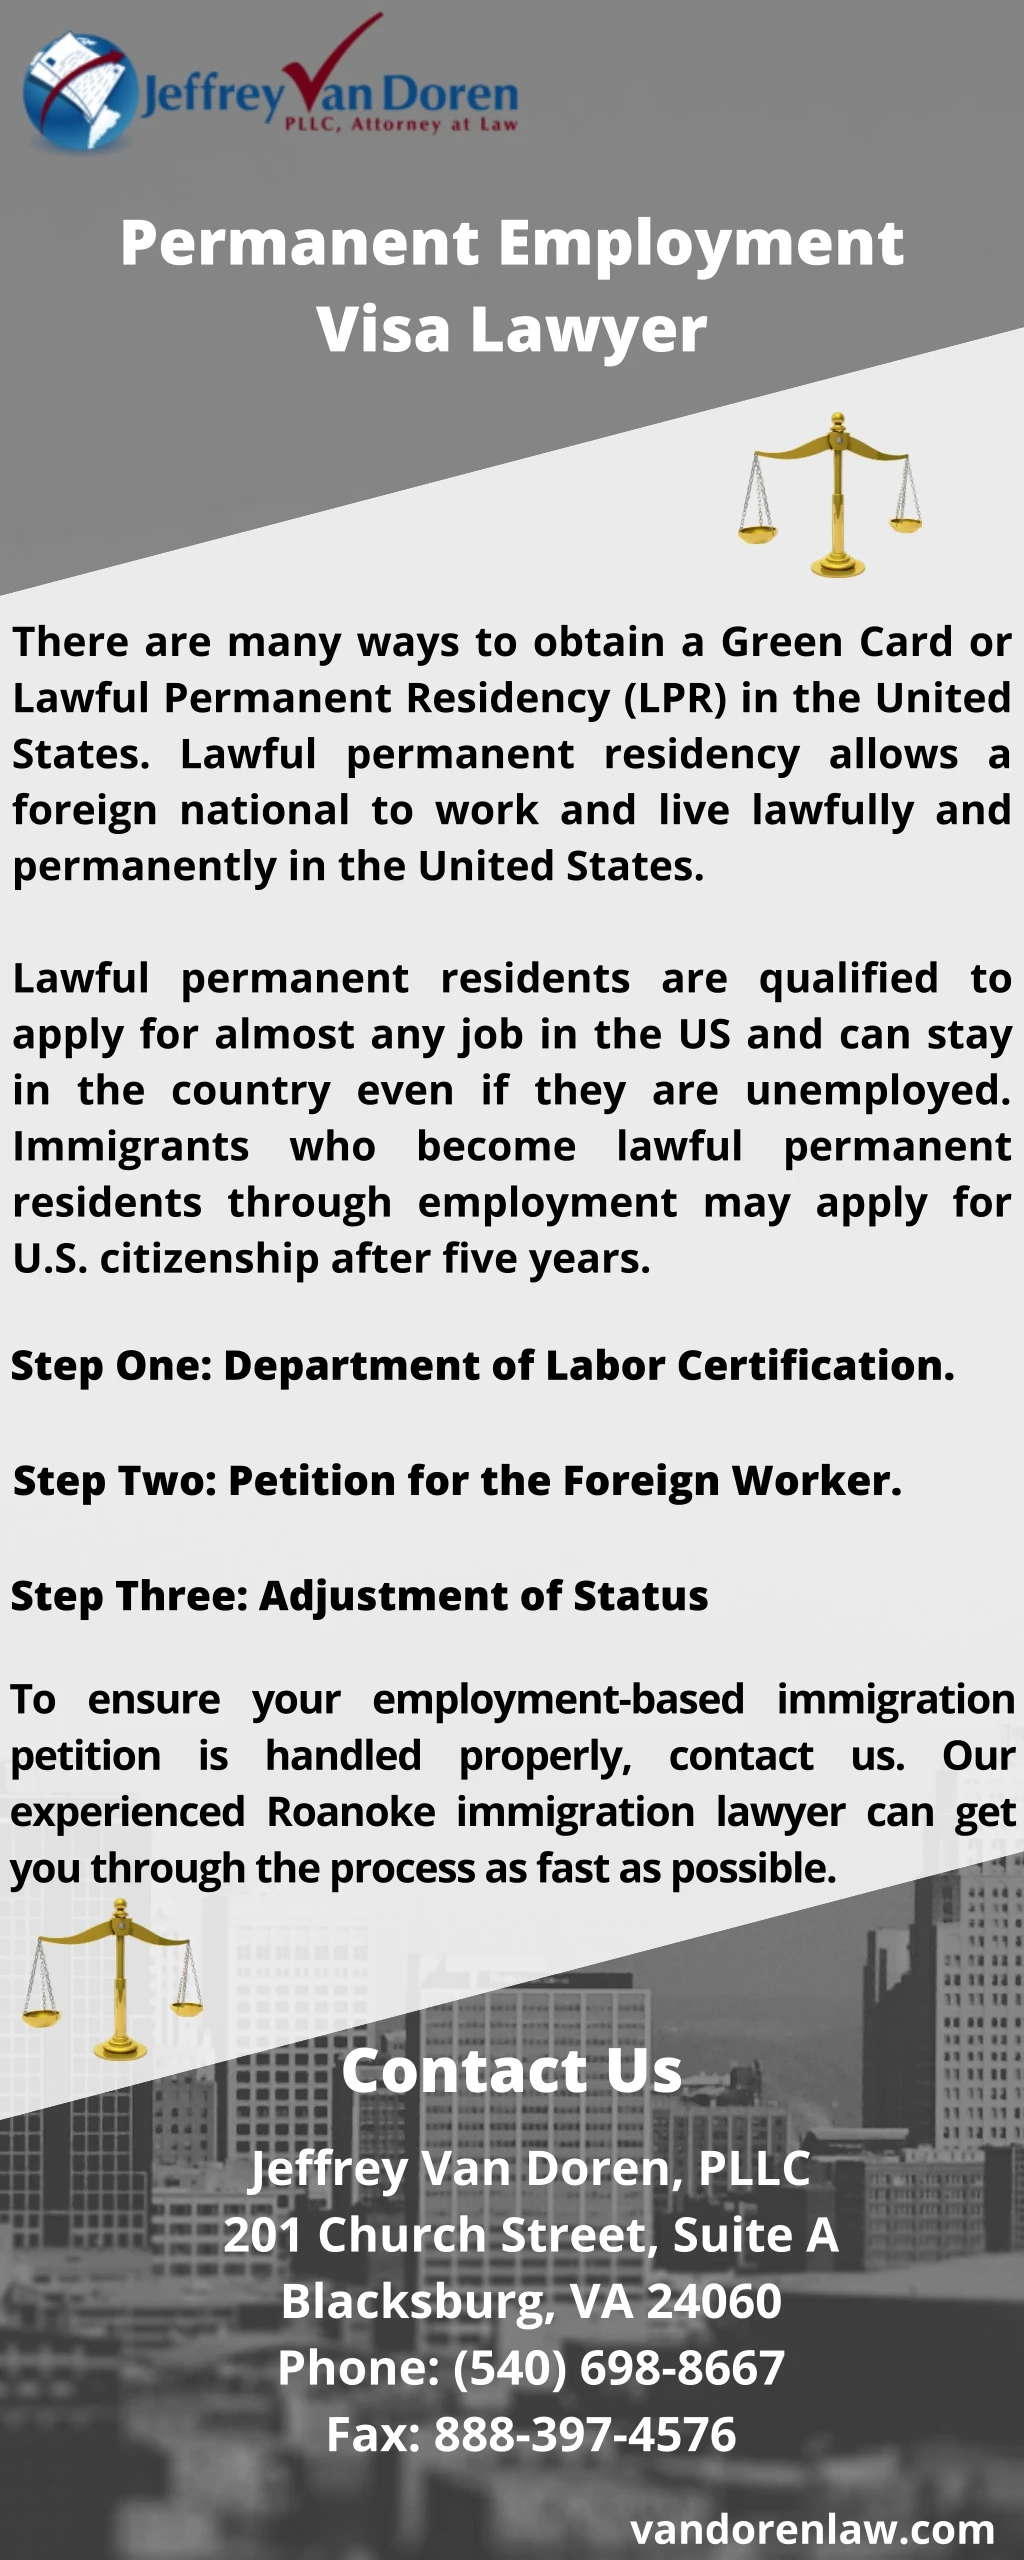 permanent employment visa lawyer